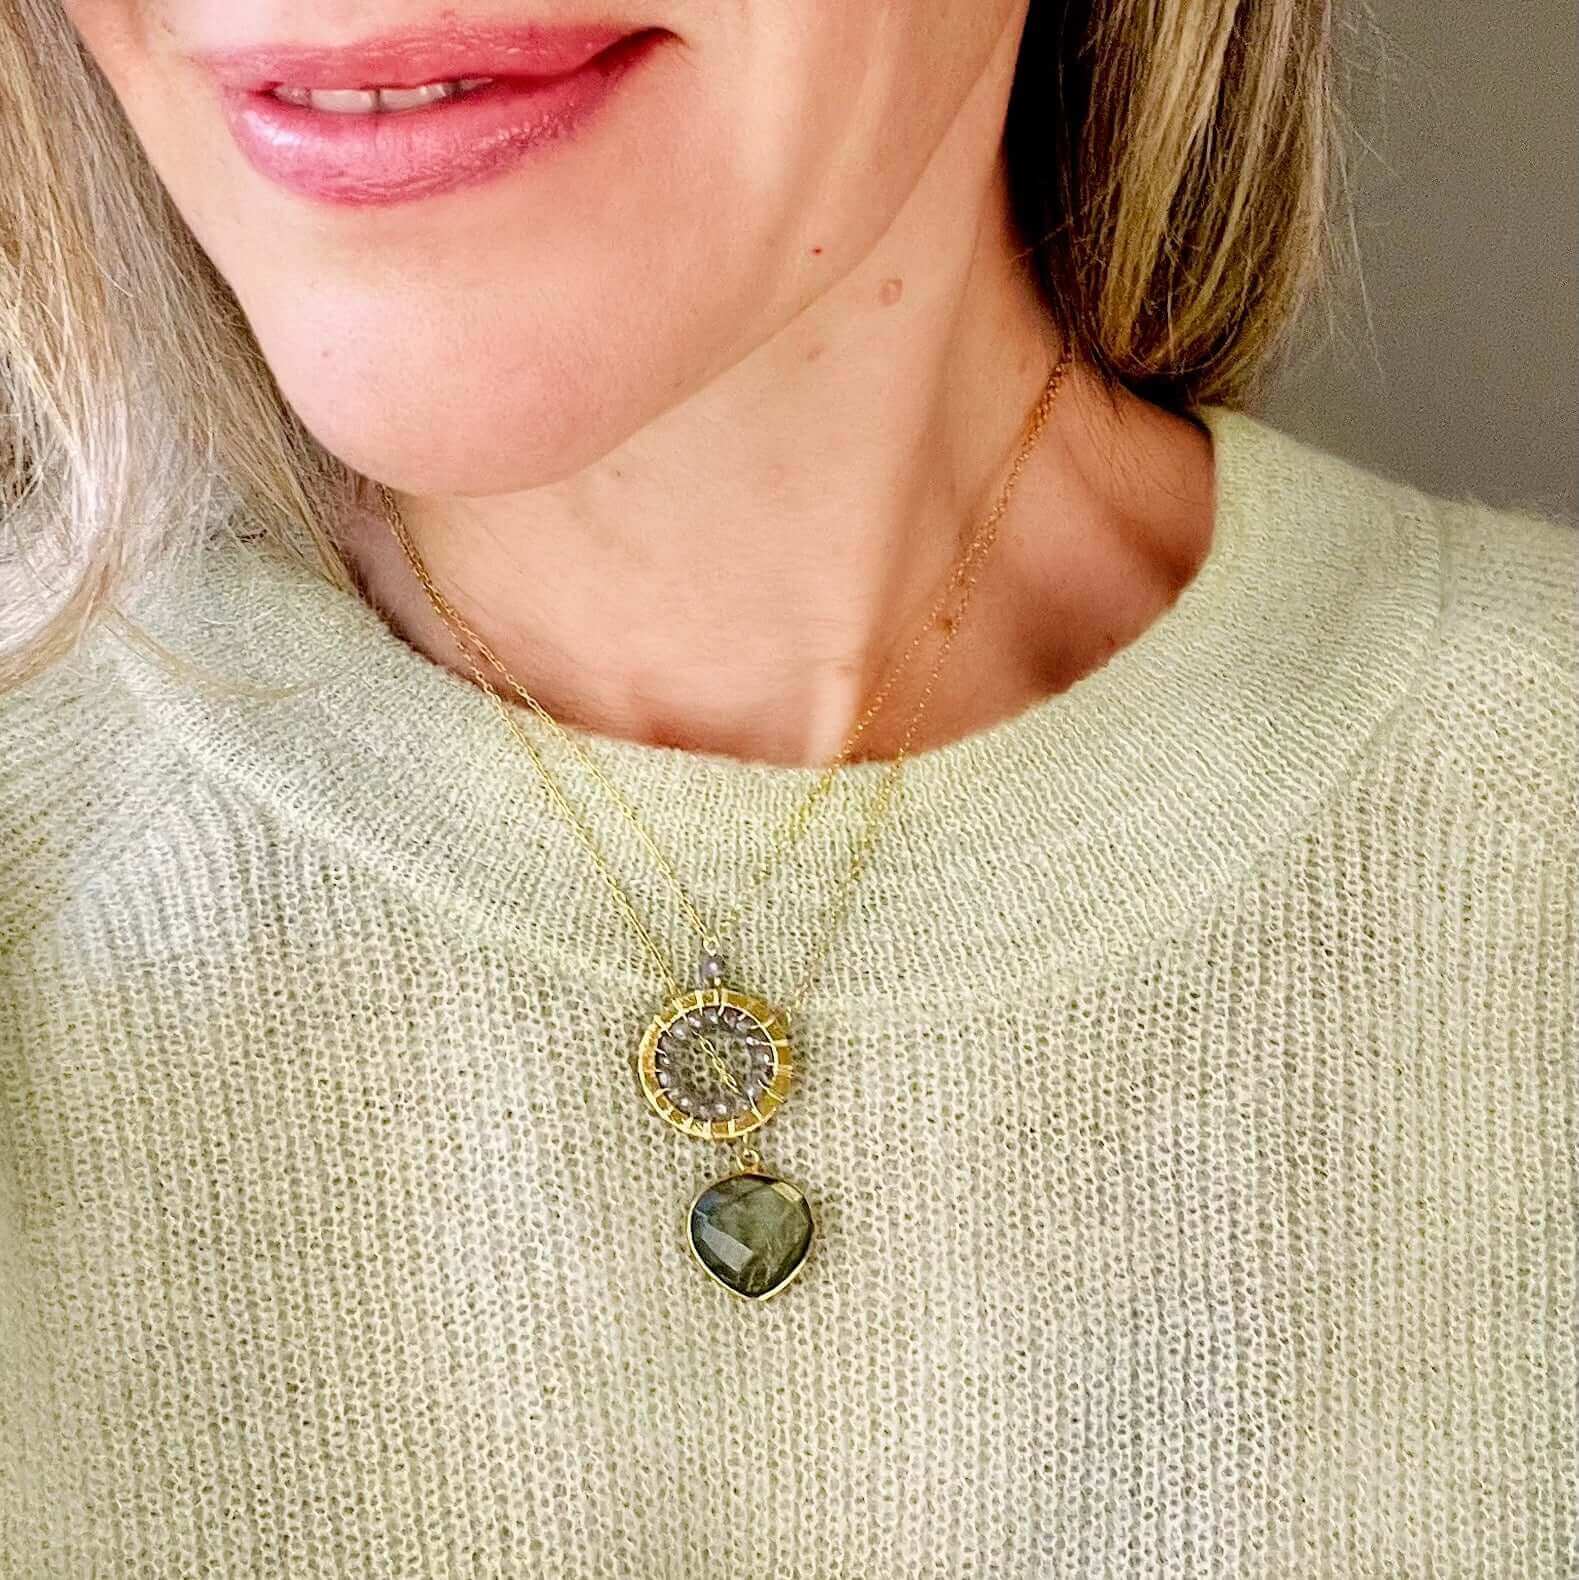 Mini Gold Circle Necklace with Unique Labradorite Gemstones Detail.